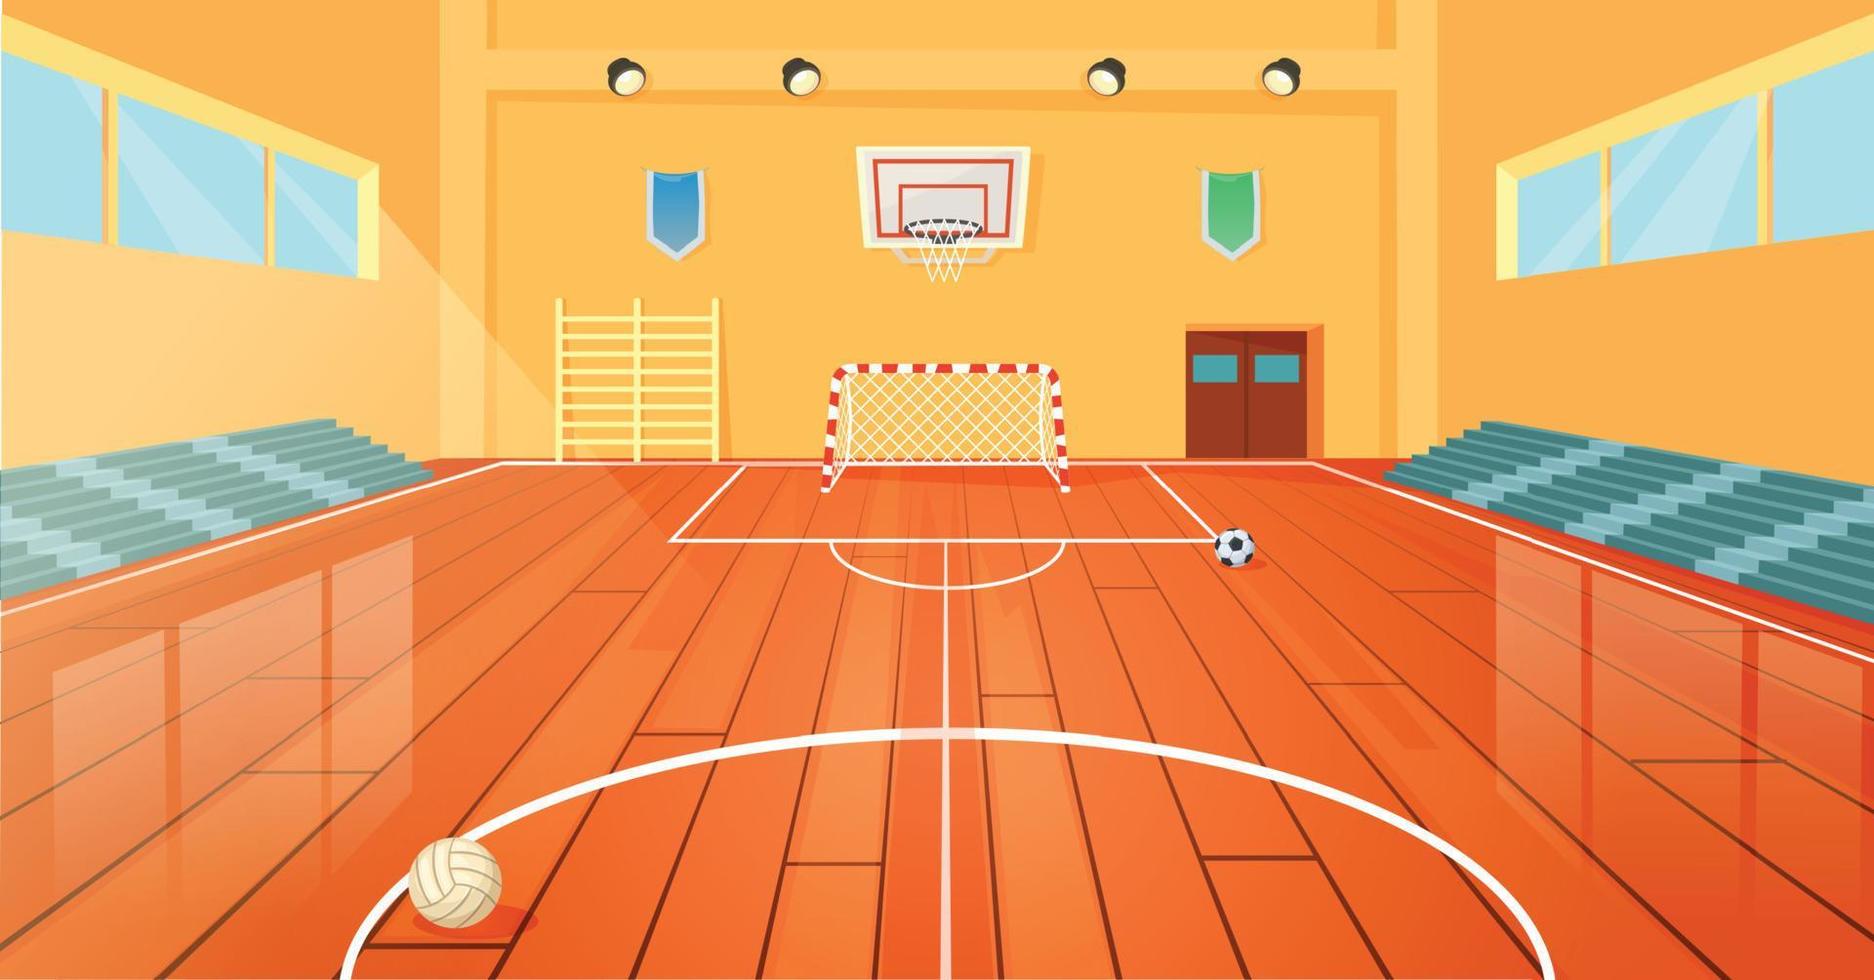 Cartoon school basketball gym, indoor sports court. Empty university gymnasium with basketball hoop and sport equipment vector illustration